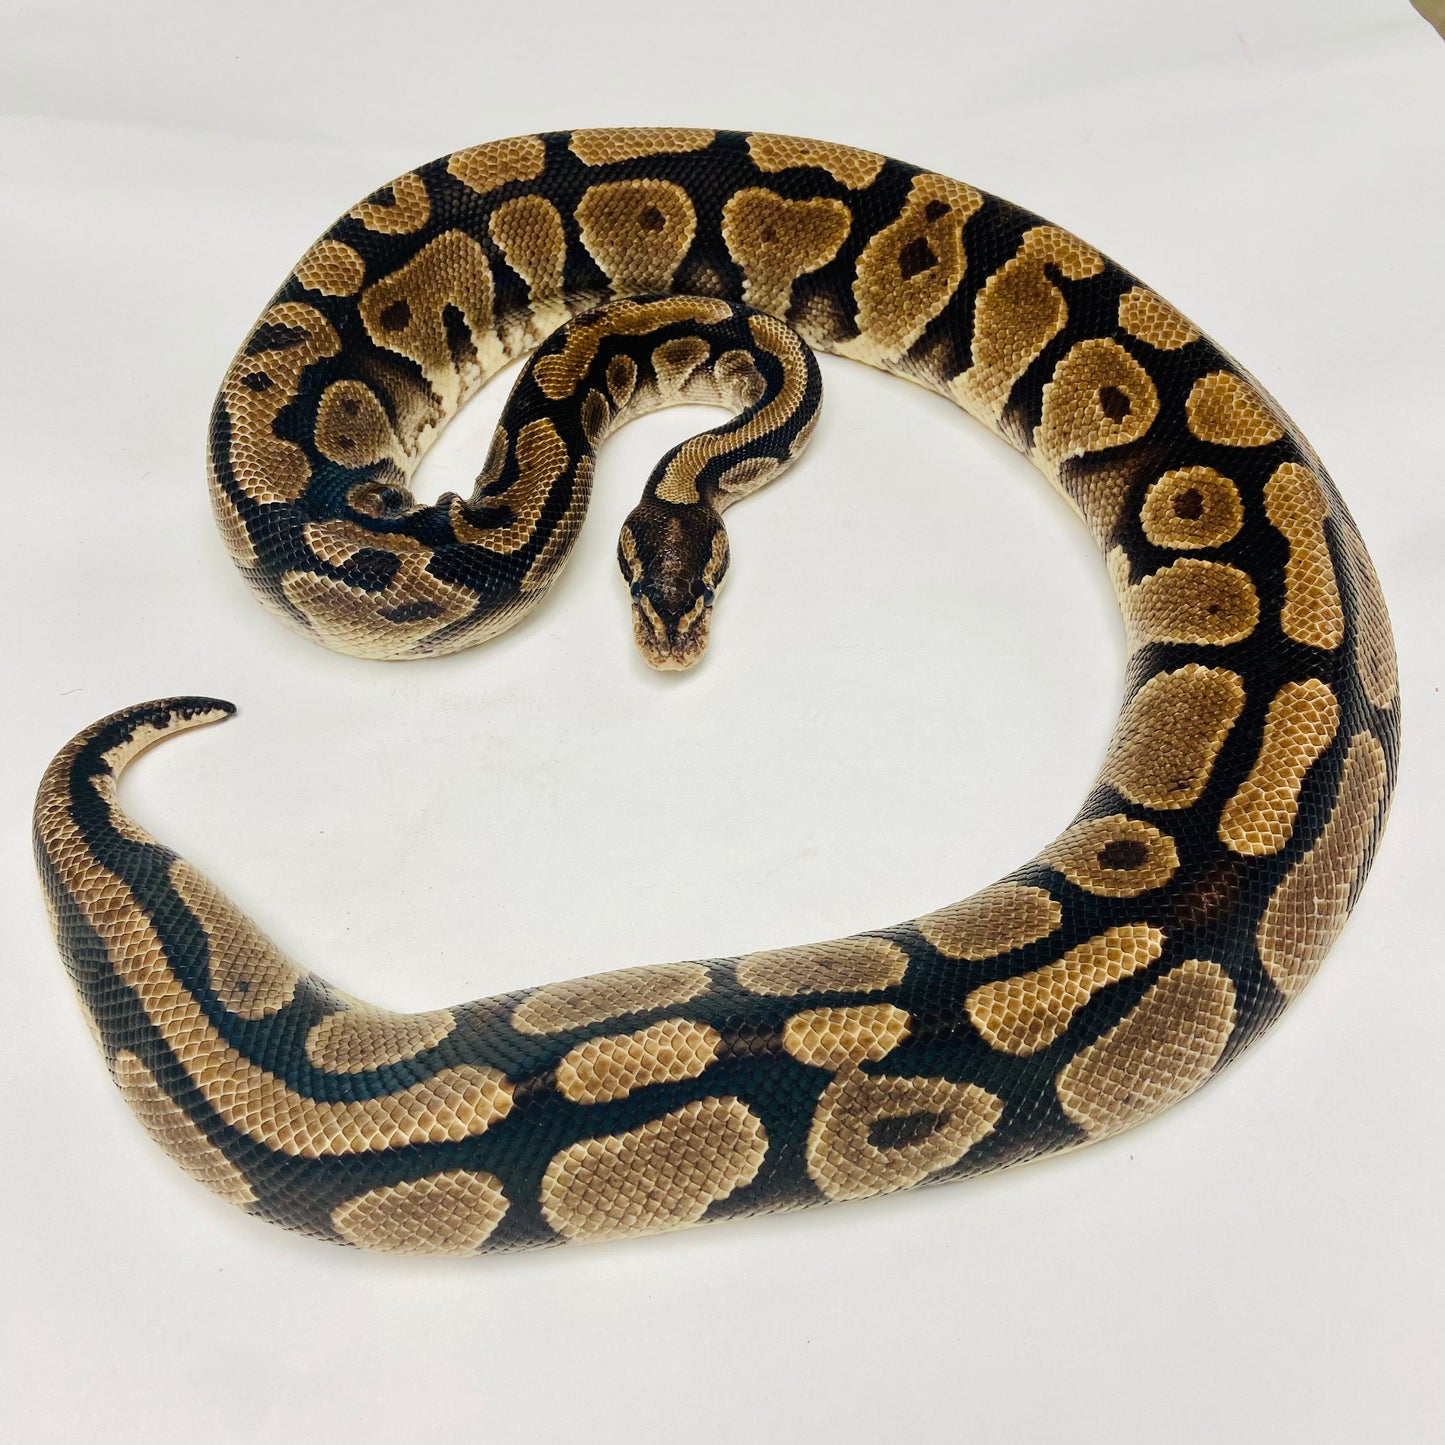 Adult Yellowbelly Ball Python- Female